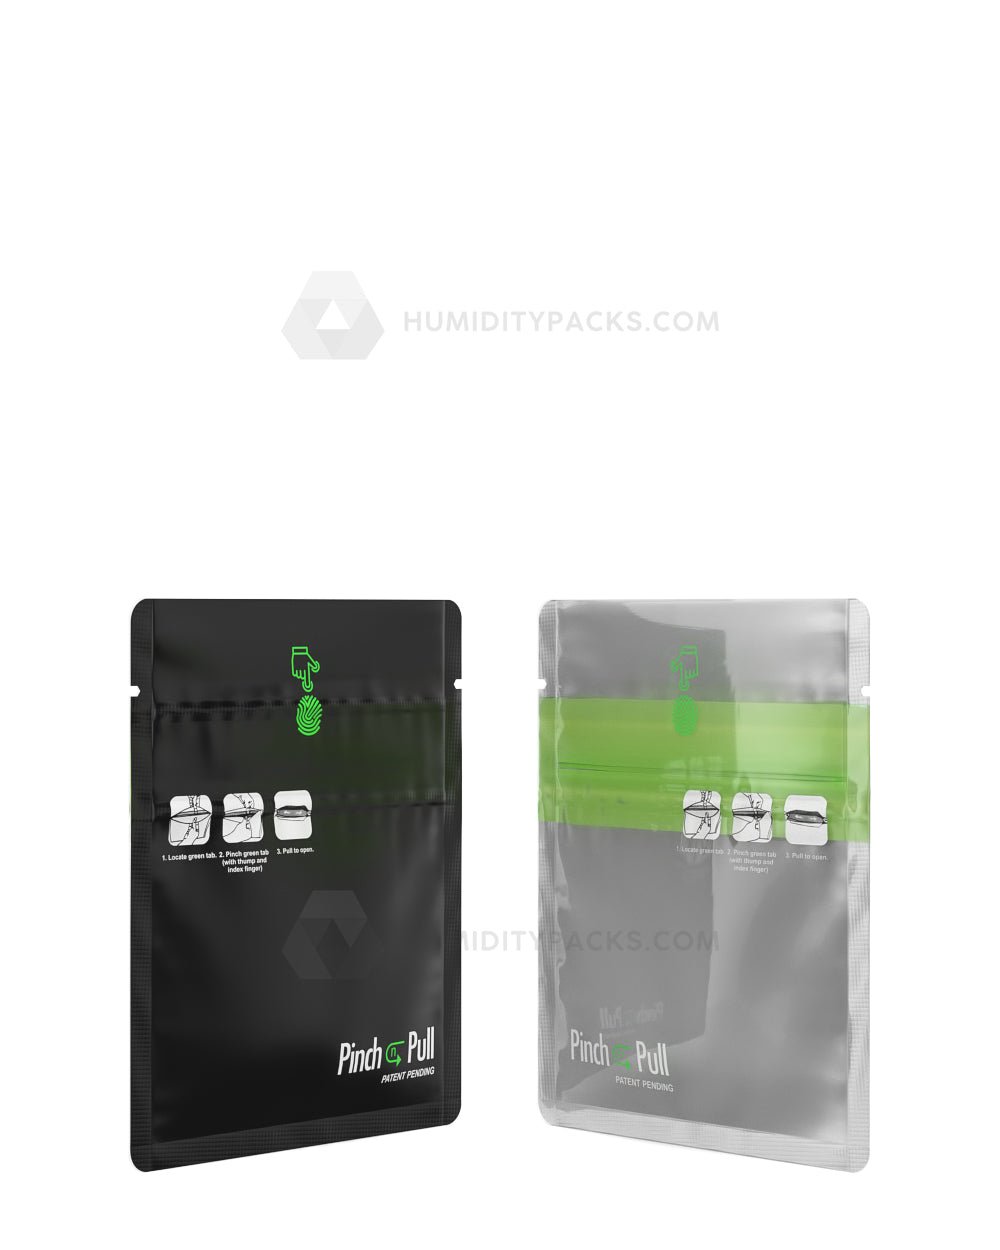 Matte-Black 3.6" x 4.5" Pinch N Pull Mylar Child Resistant & Tamper Evident Vista Bags (1 gram) 250/Box Humidity Packs - 2